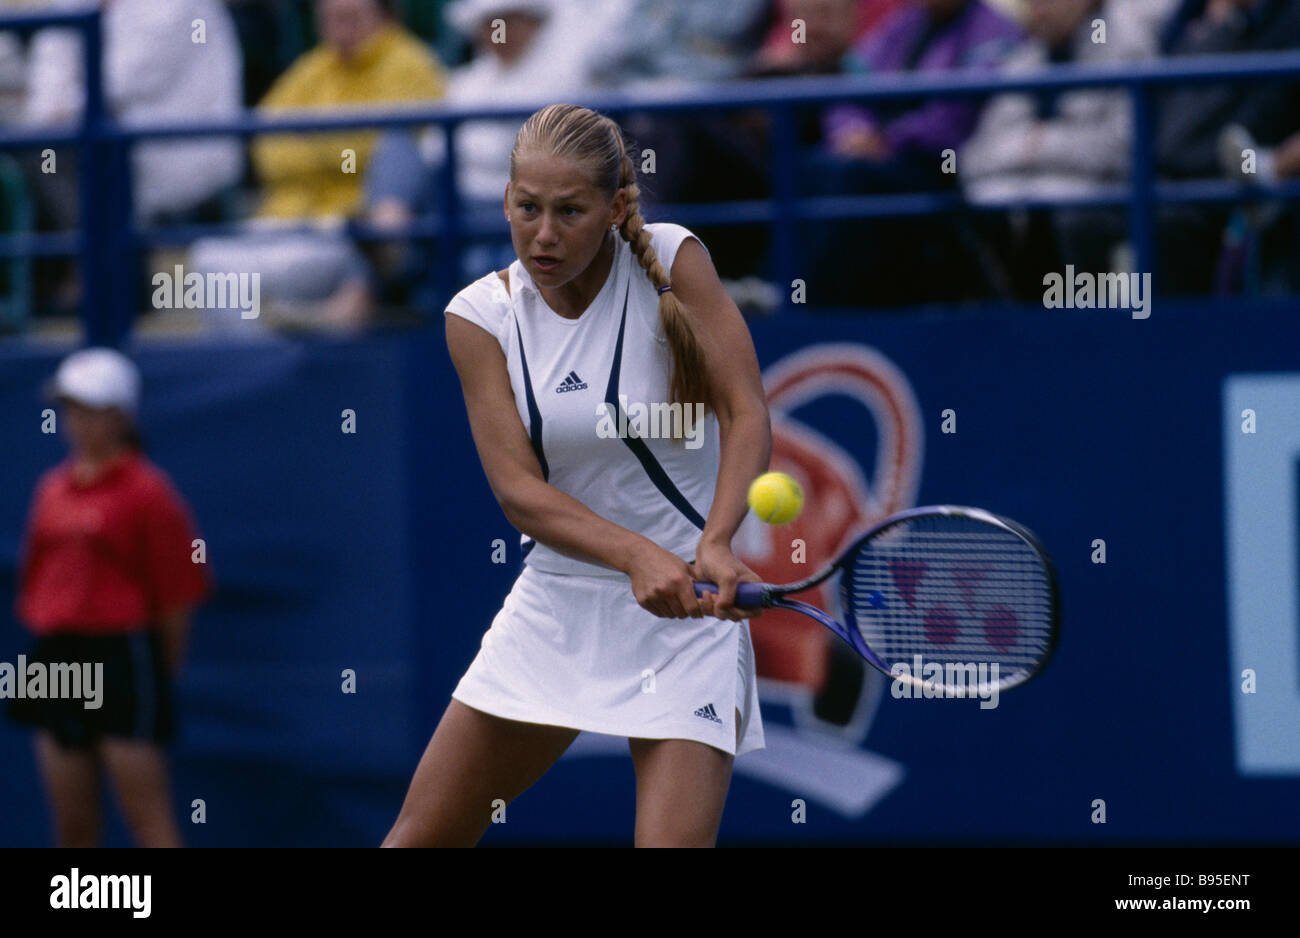 SPORT Tennis Women s Anna Kournikova at Wimbledon 2000 about to hit a ball Stock Photo